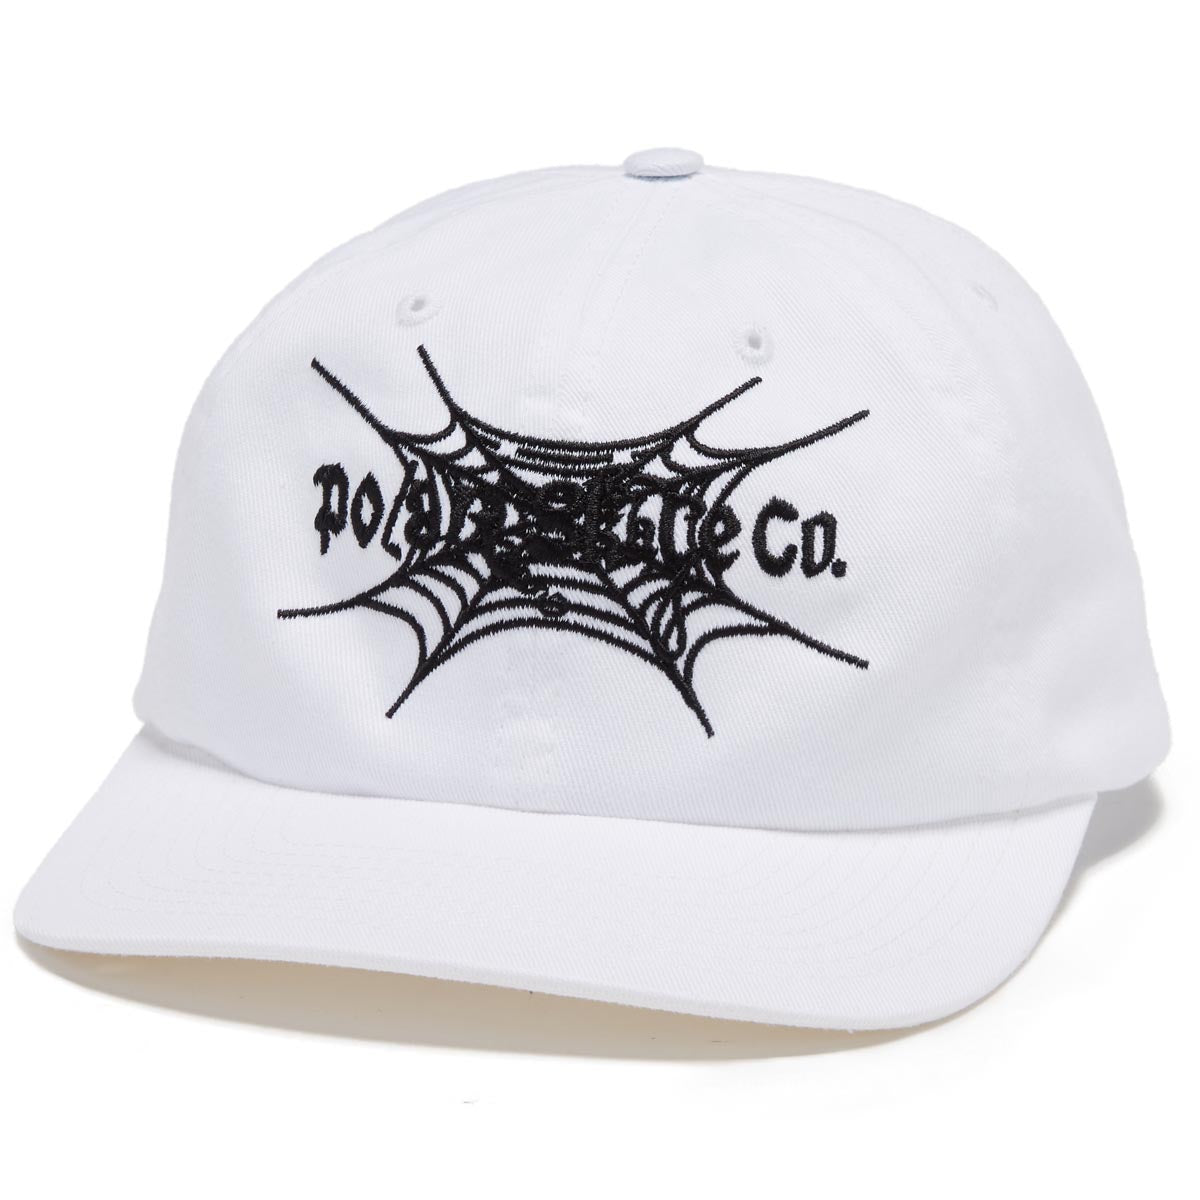 Polar Michael Spiderweb Hat - White image 1